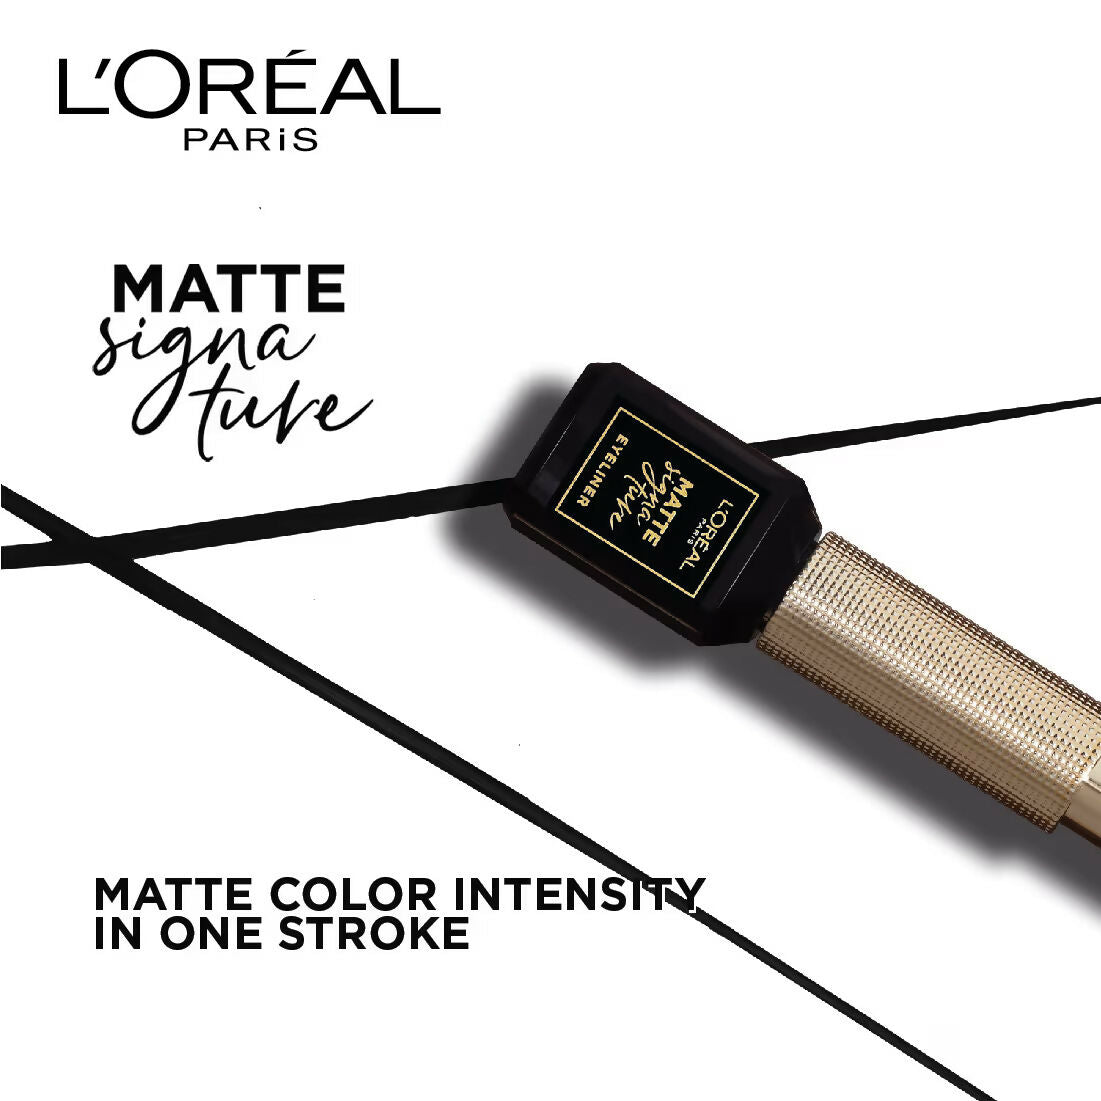 L'Oreal Paris Matte Signature Eyeliner - Black